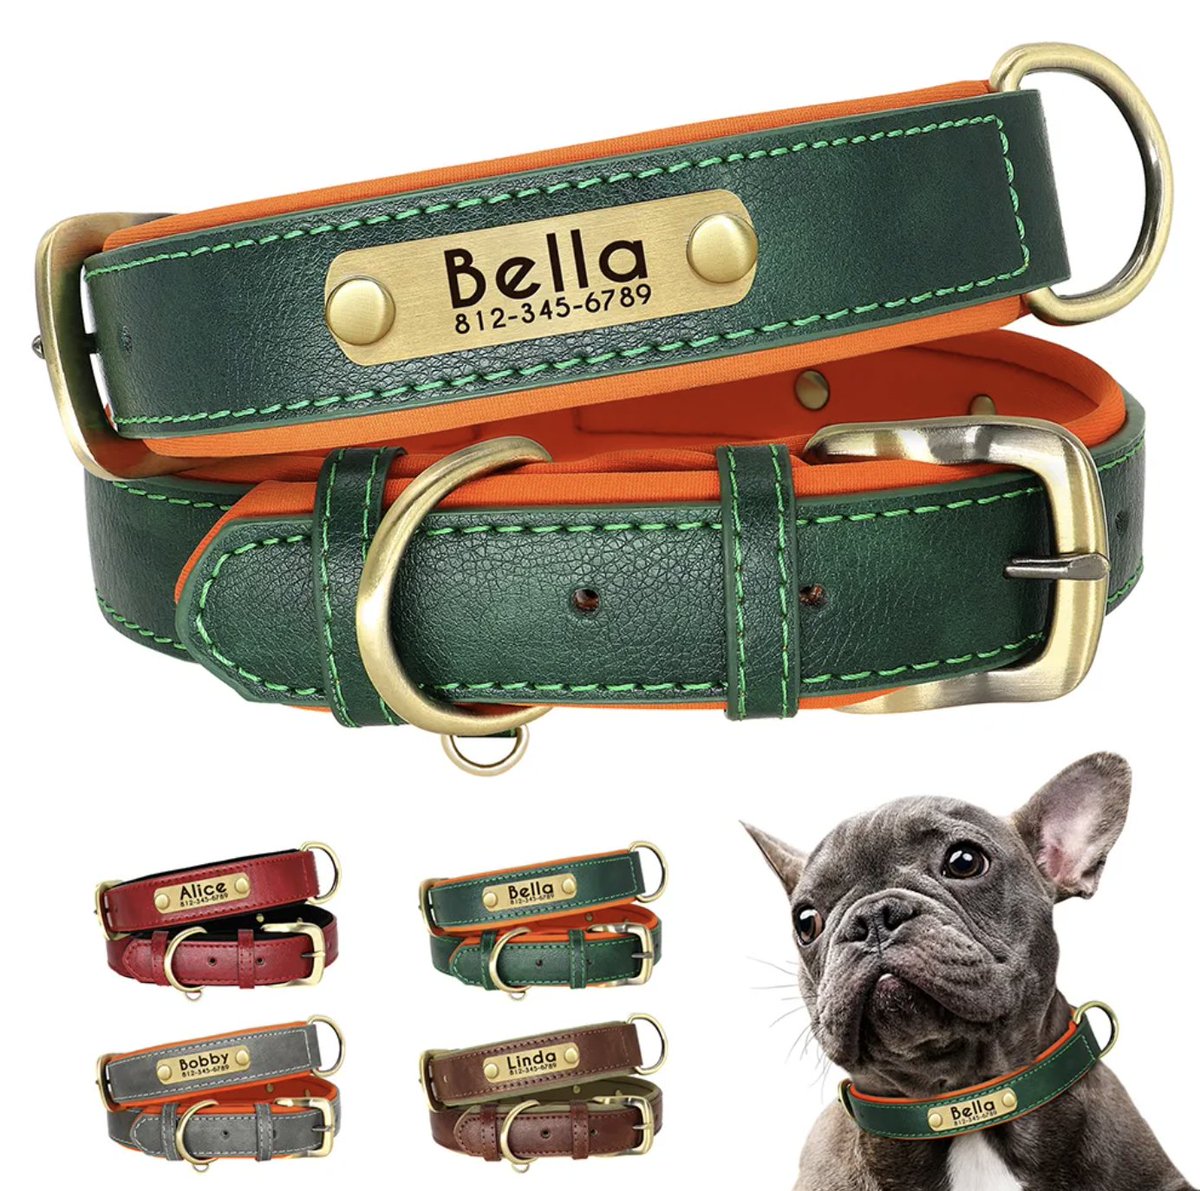 Customized Leather ID Nameplate Dog Collar
bestpetsco.com/product/custom…
#dogcollar #dogcollarsforsale #leatherdogcollar #dogcollarswag #iddogcollar